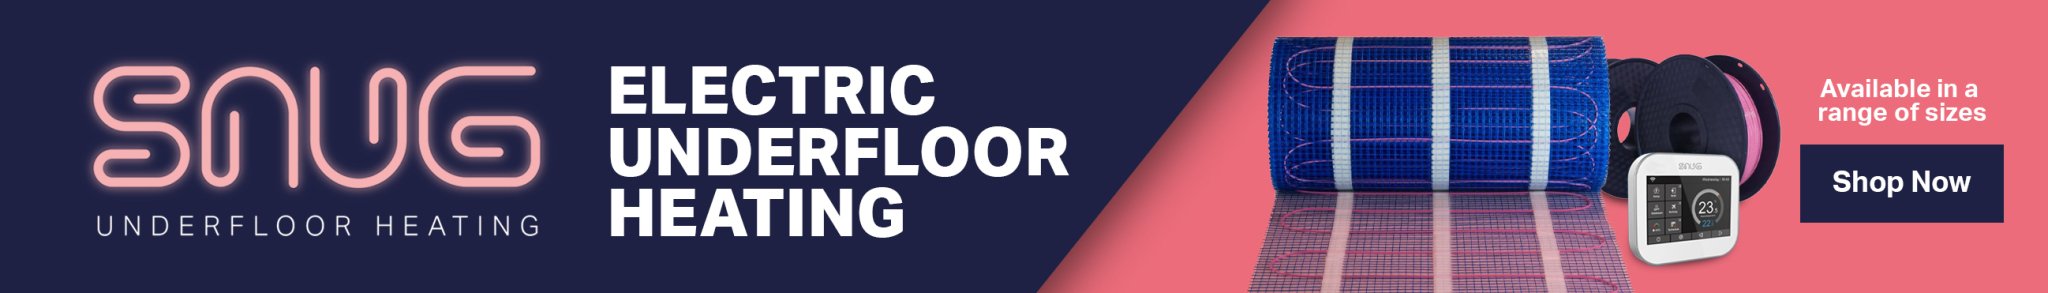 Snug underfloor heating collection banner